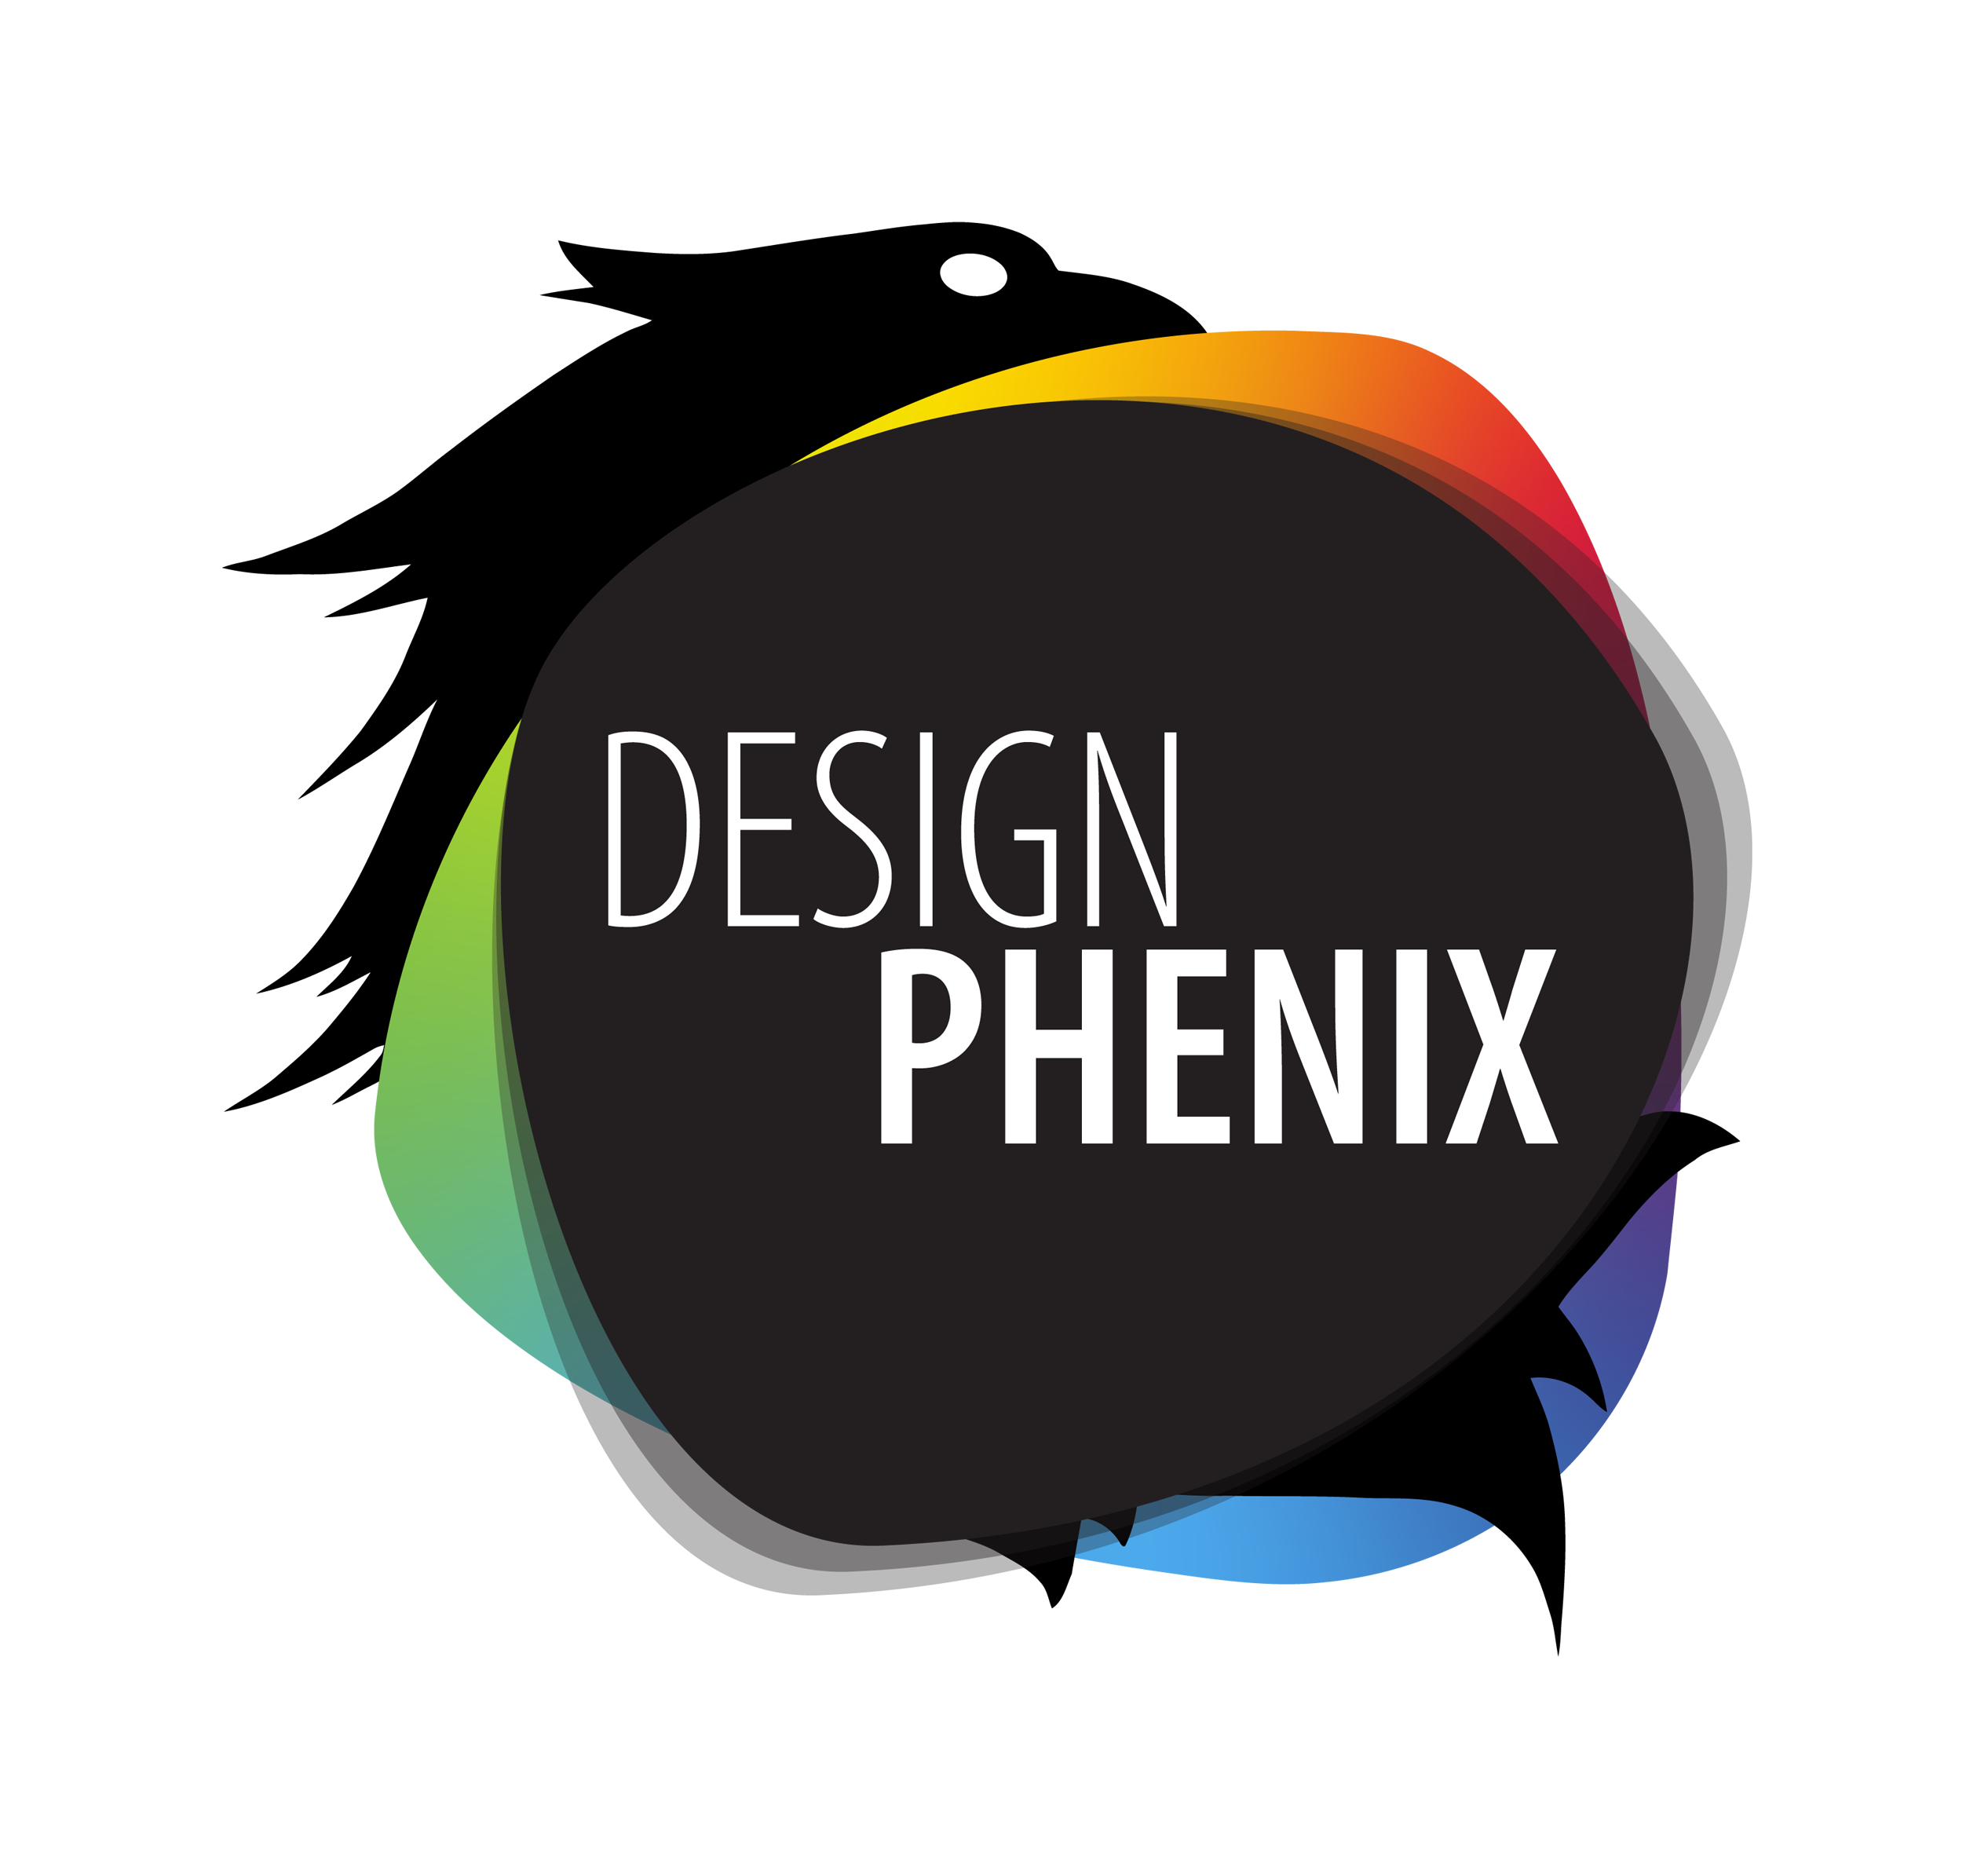 Logo Design Phénix